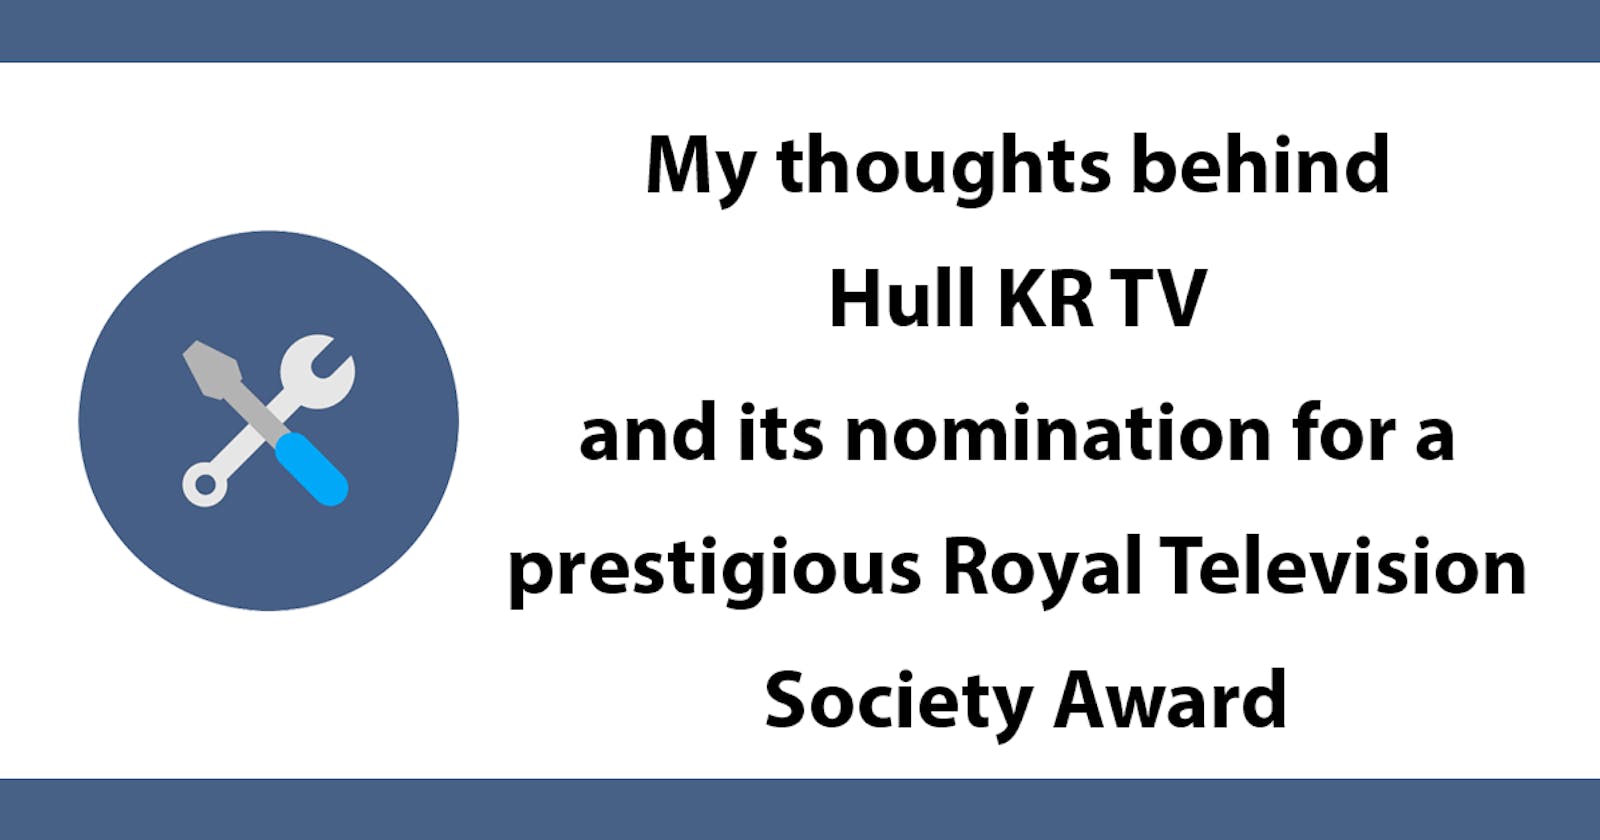 My thoughts behind Hull KR TV and its nomination for a prestigious Royal Television Society Award